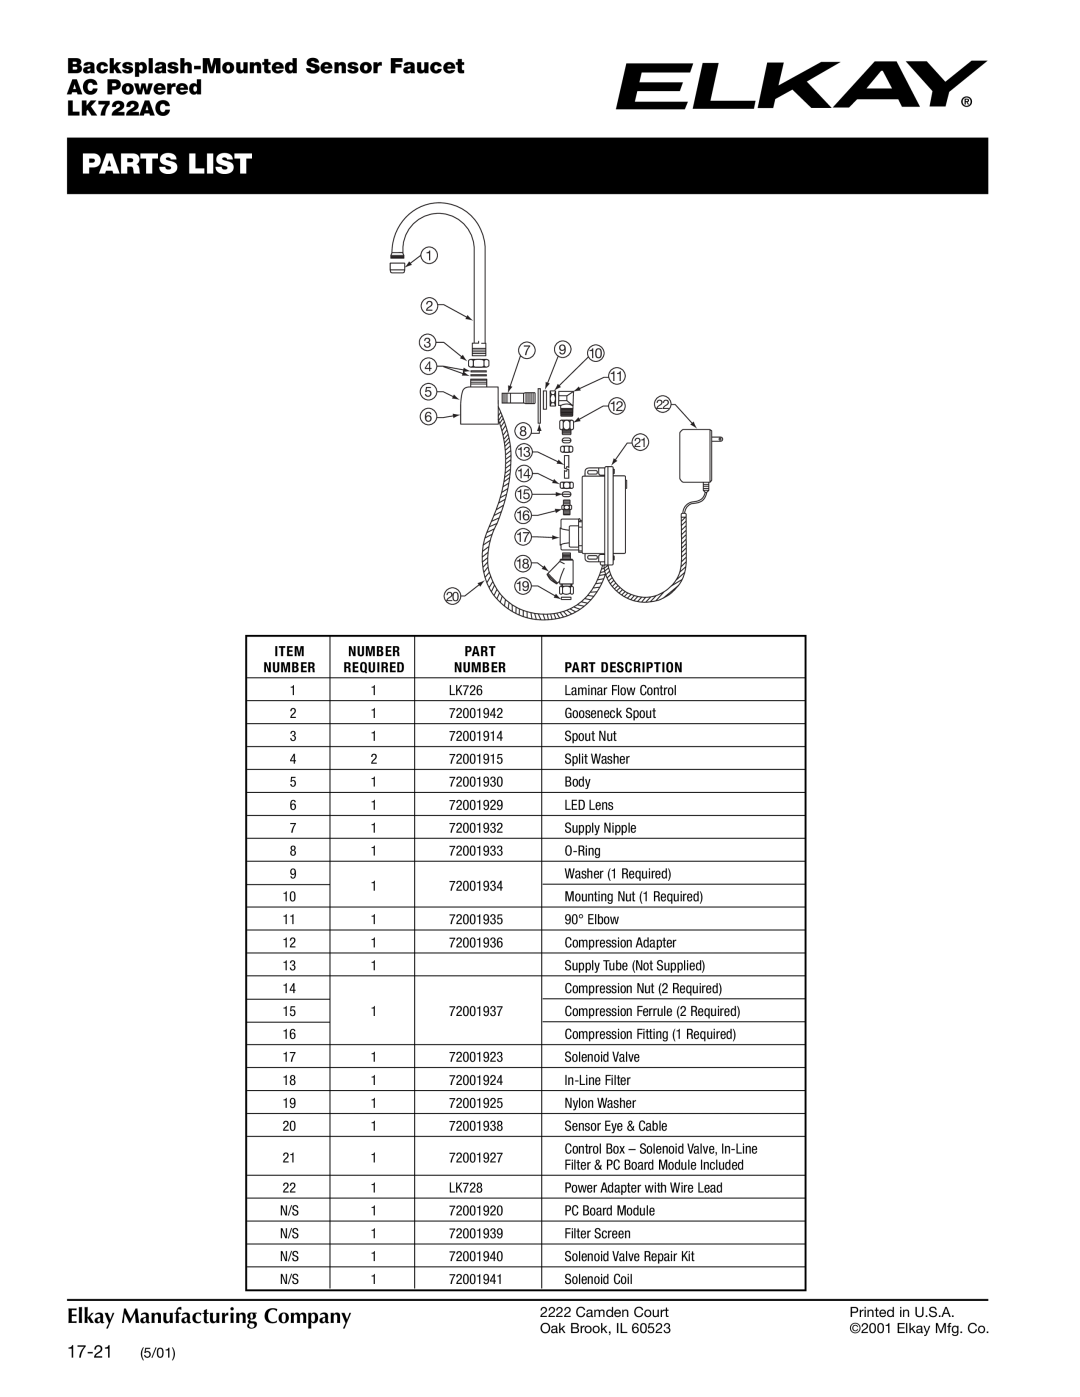 Elkay LK722AC specifications Parts List, 17-21 5/01, Number, Part Description, Backsplash-MountedSensor Faucet AC Powered 